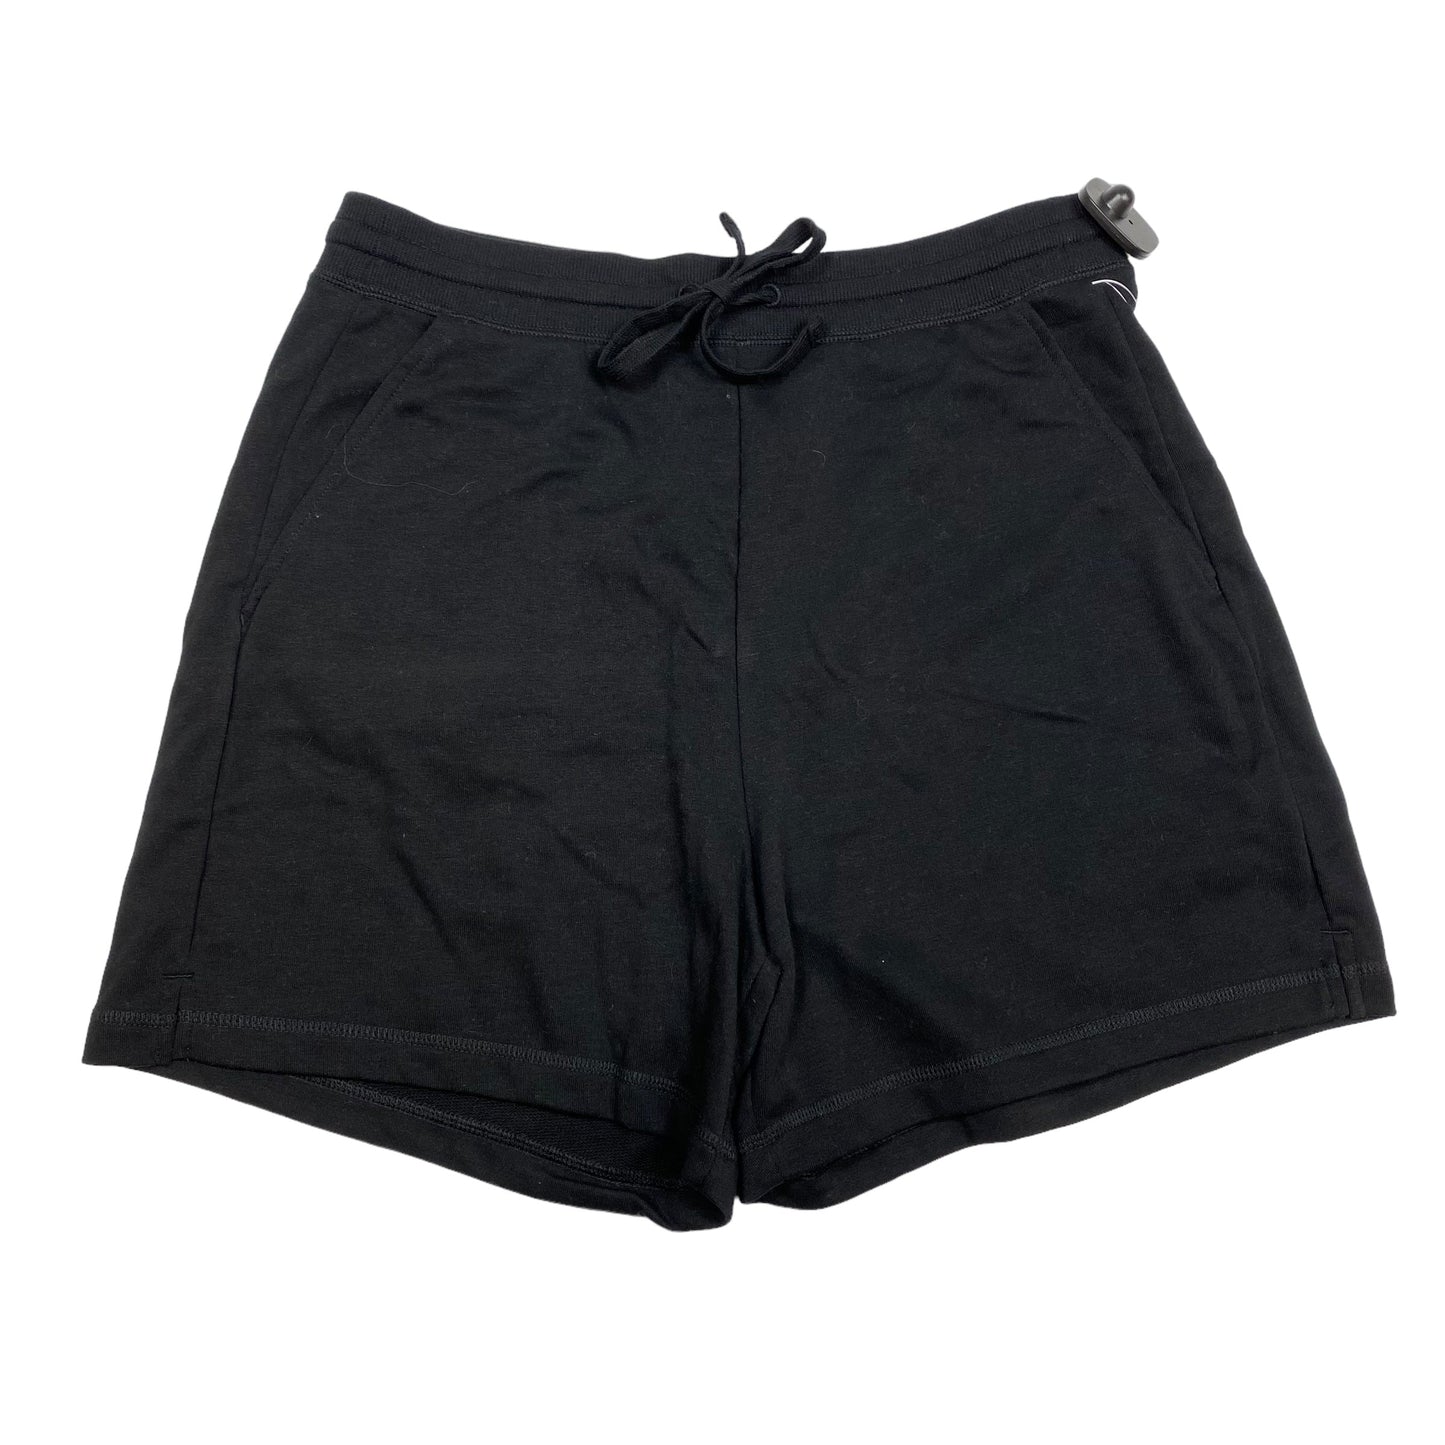 Black Athletic Shorts Old Navy, Size L